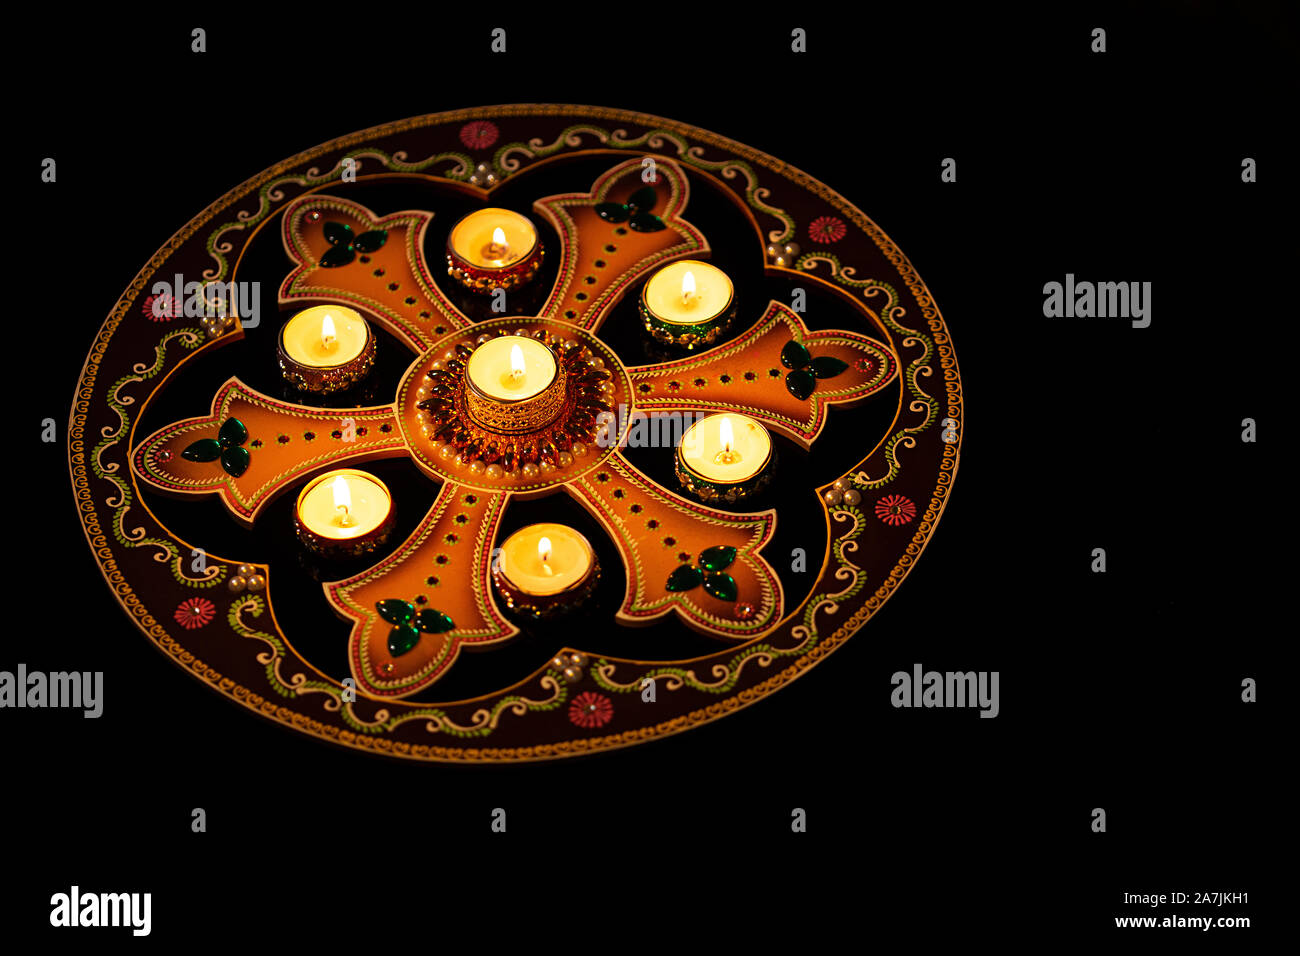 Diwali Rangoli Burning Diya Oil-Lamp With Lighting Diwali festival Celebration Nobody Stock Photo